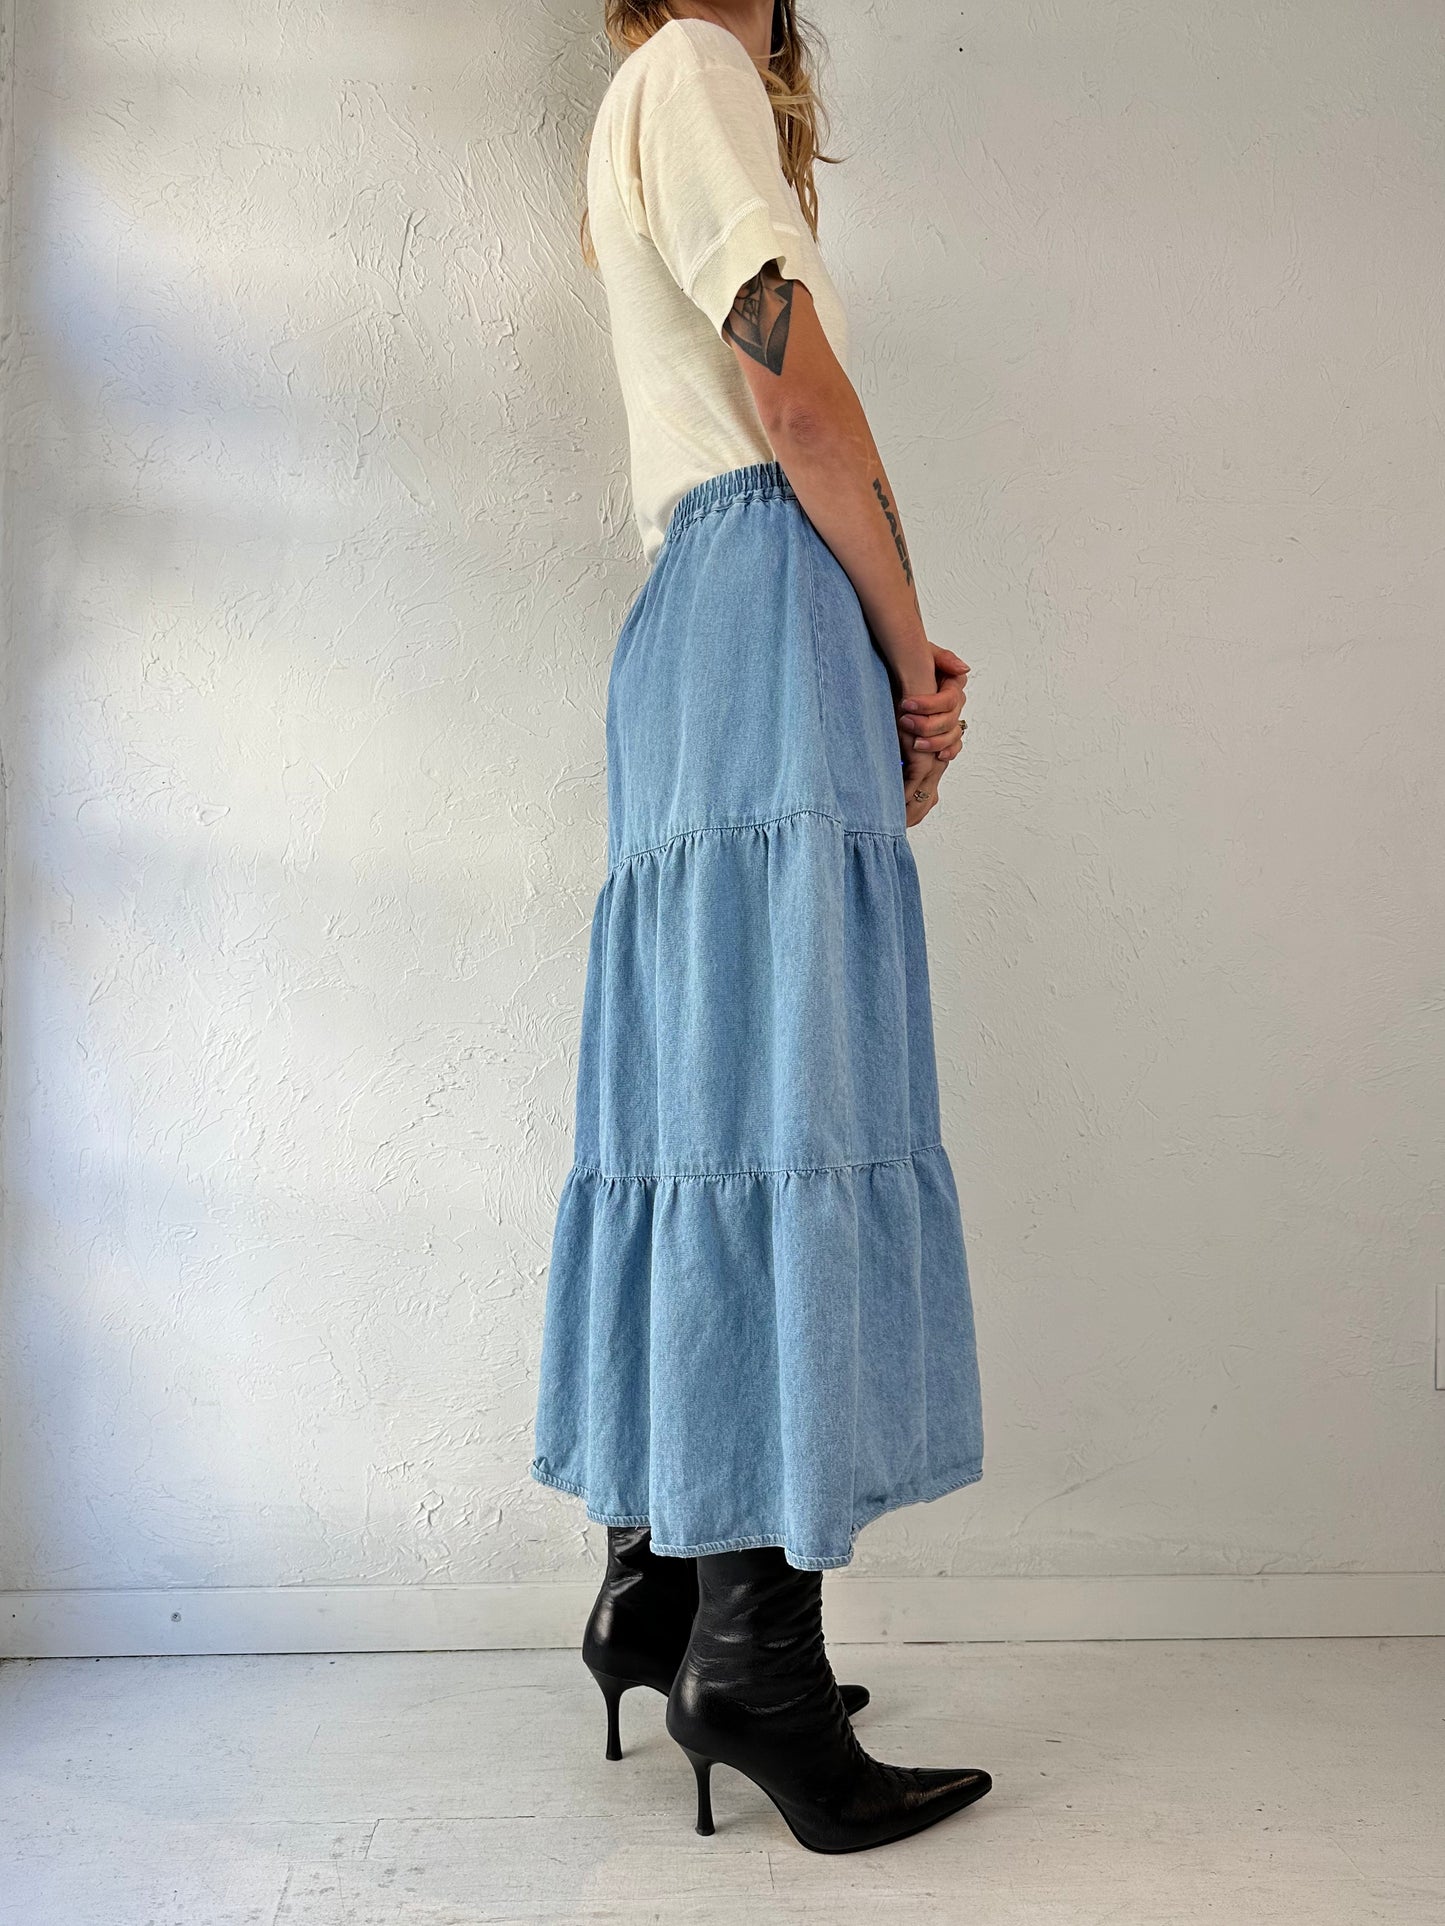 90s 'Daniel Caron' Denim Peasant Skirt / Small